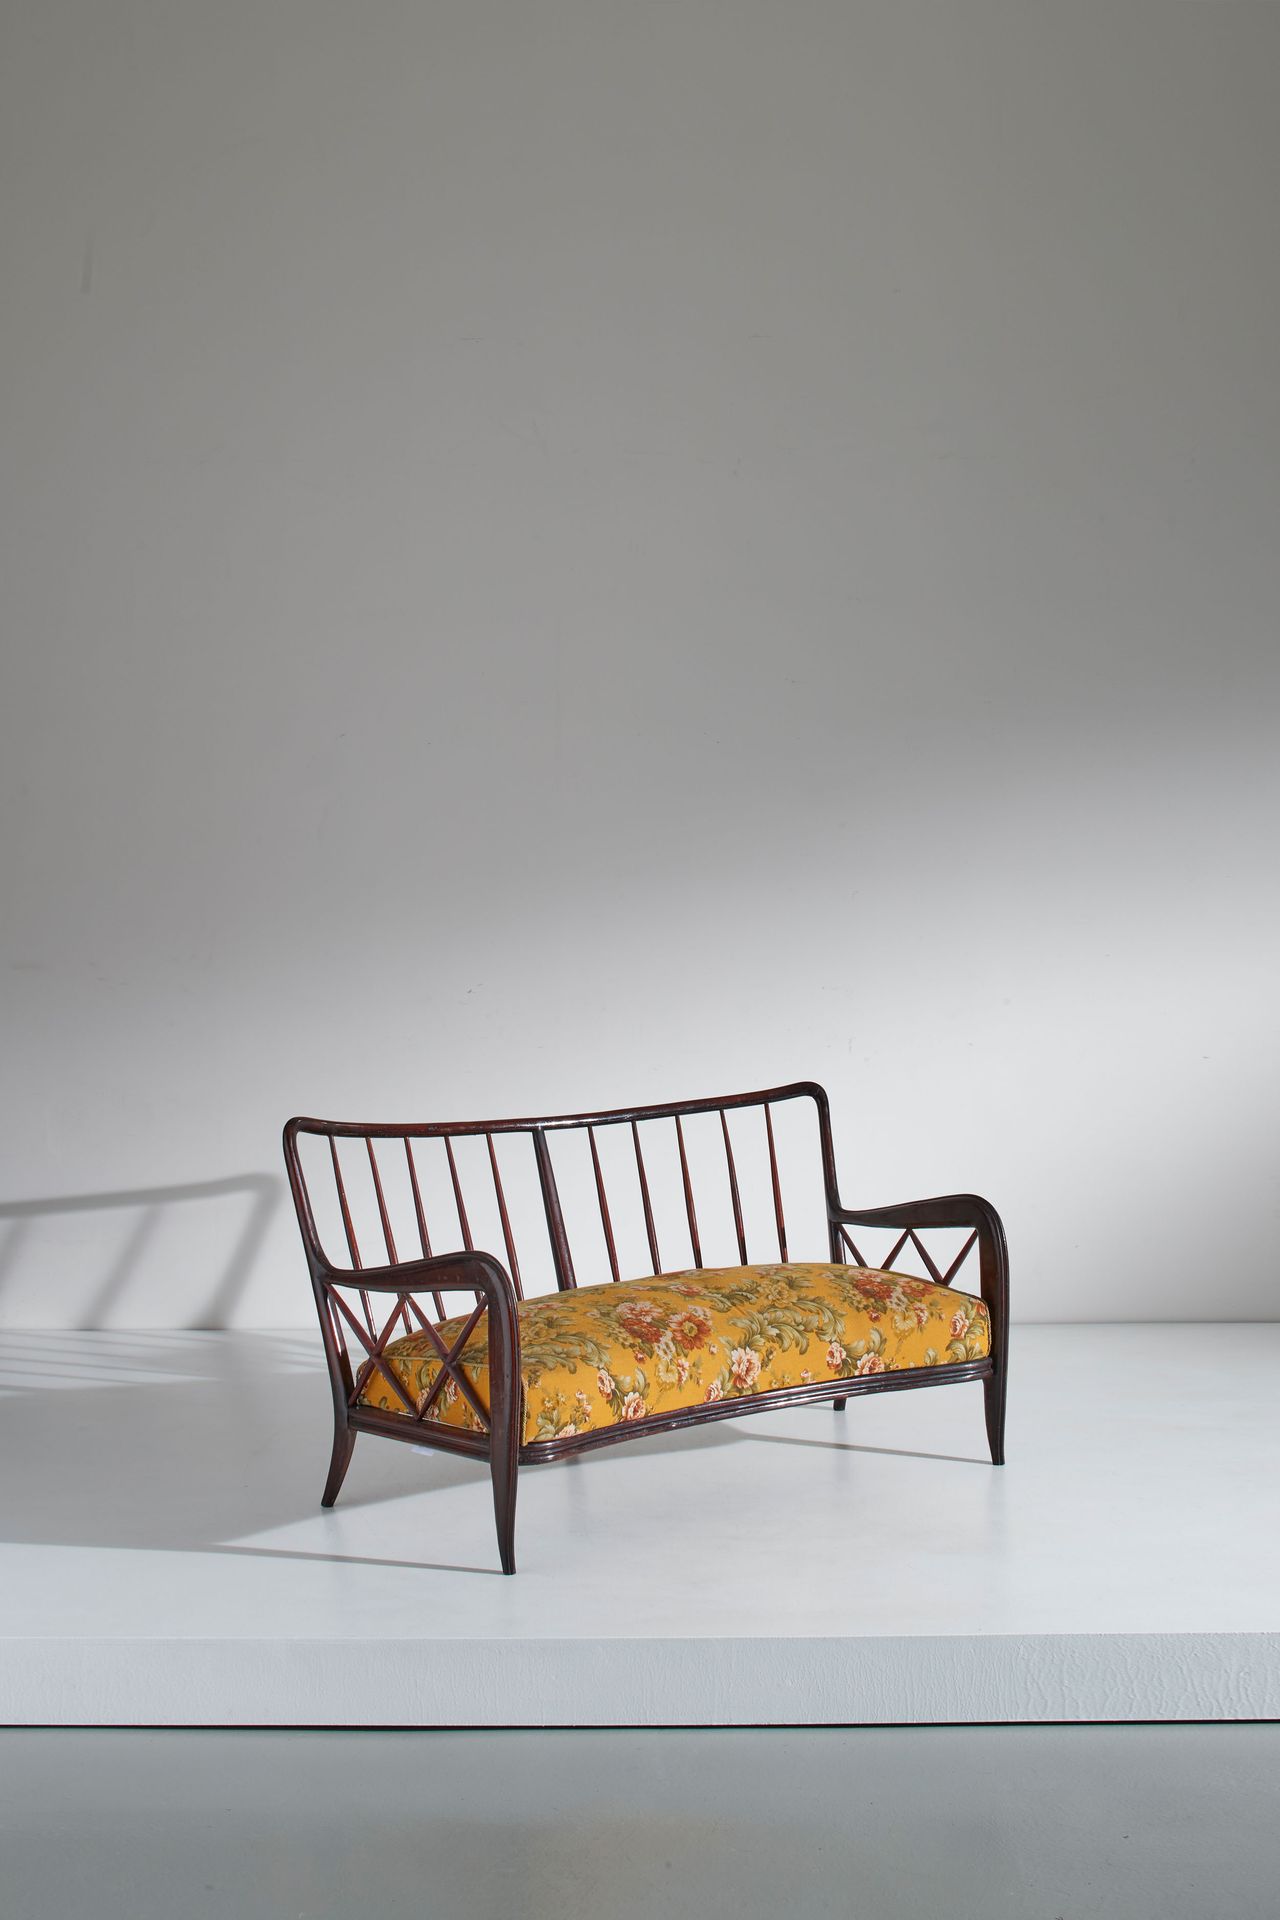 PAOLO BUFFA (ATTRIB. A) 弧形沙发。染色的山毛榉木，软垫织物。意大利20世纪50年代。
cm 77x147x90
A CURVED SOF&hellip;